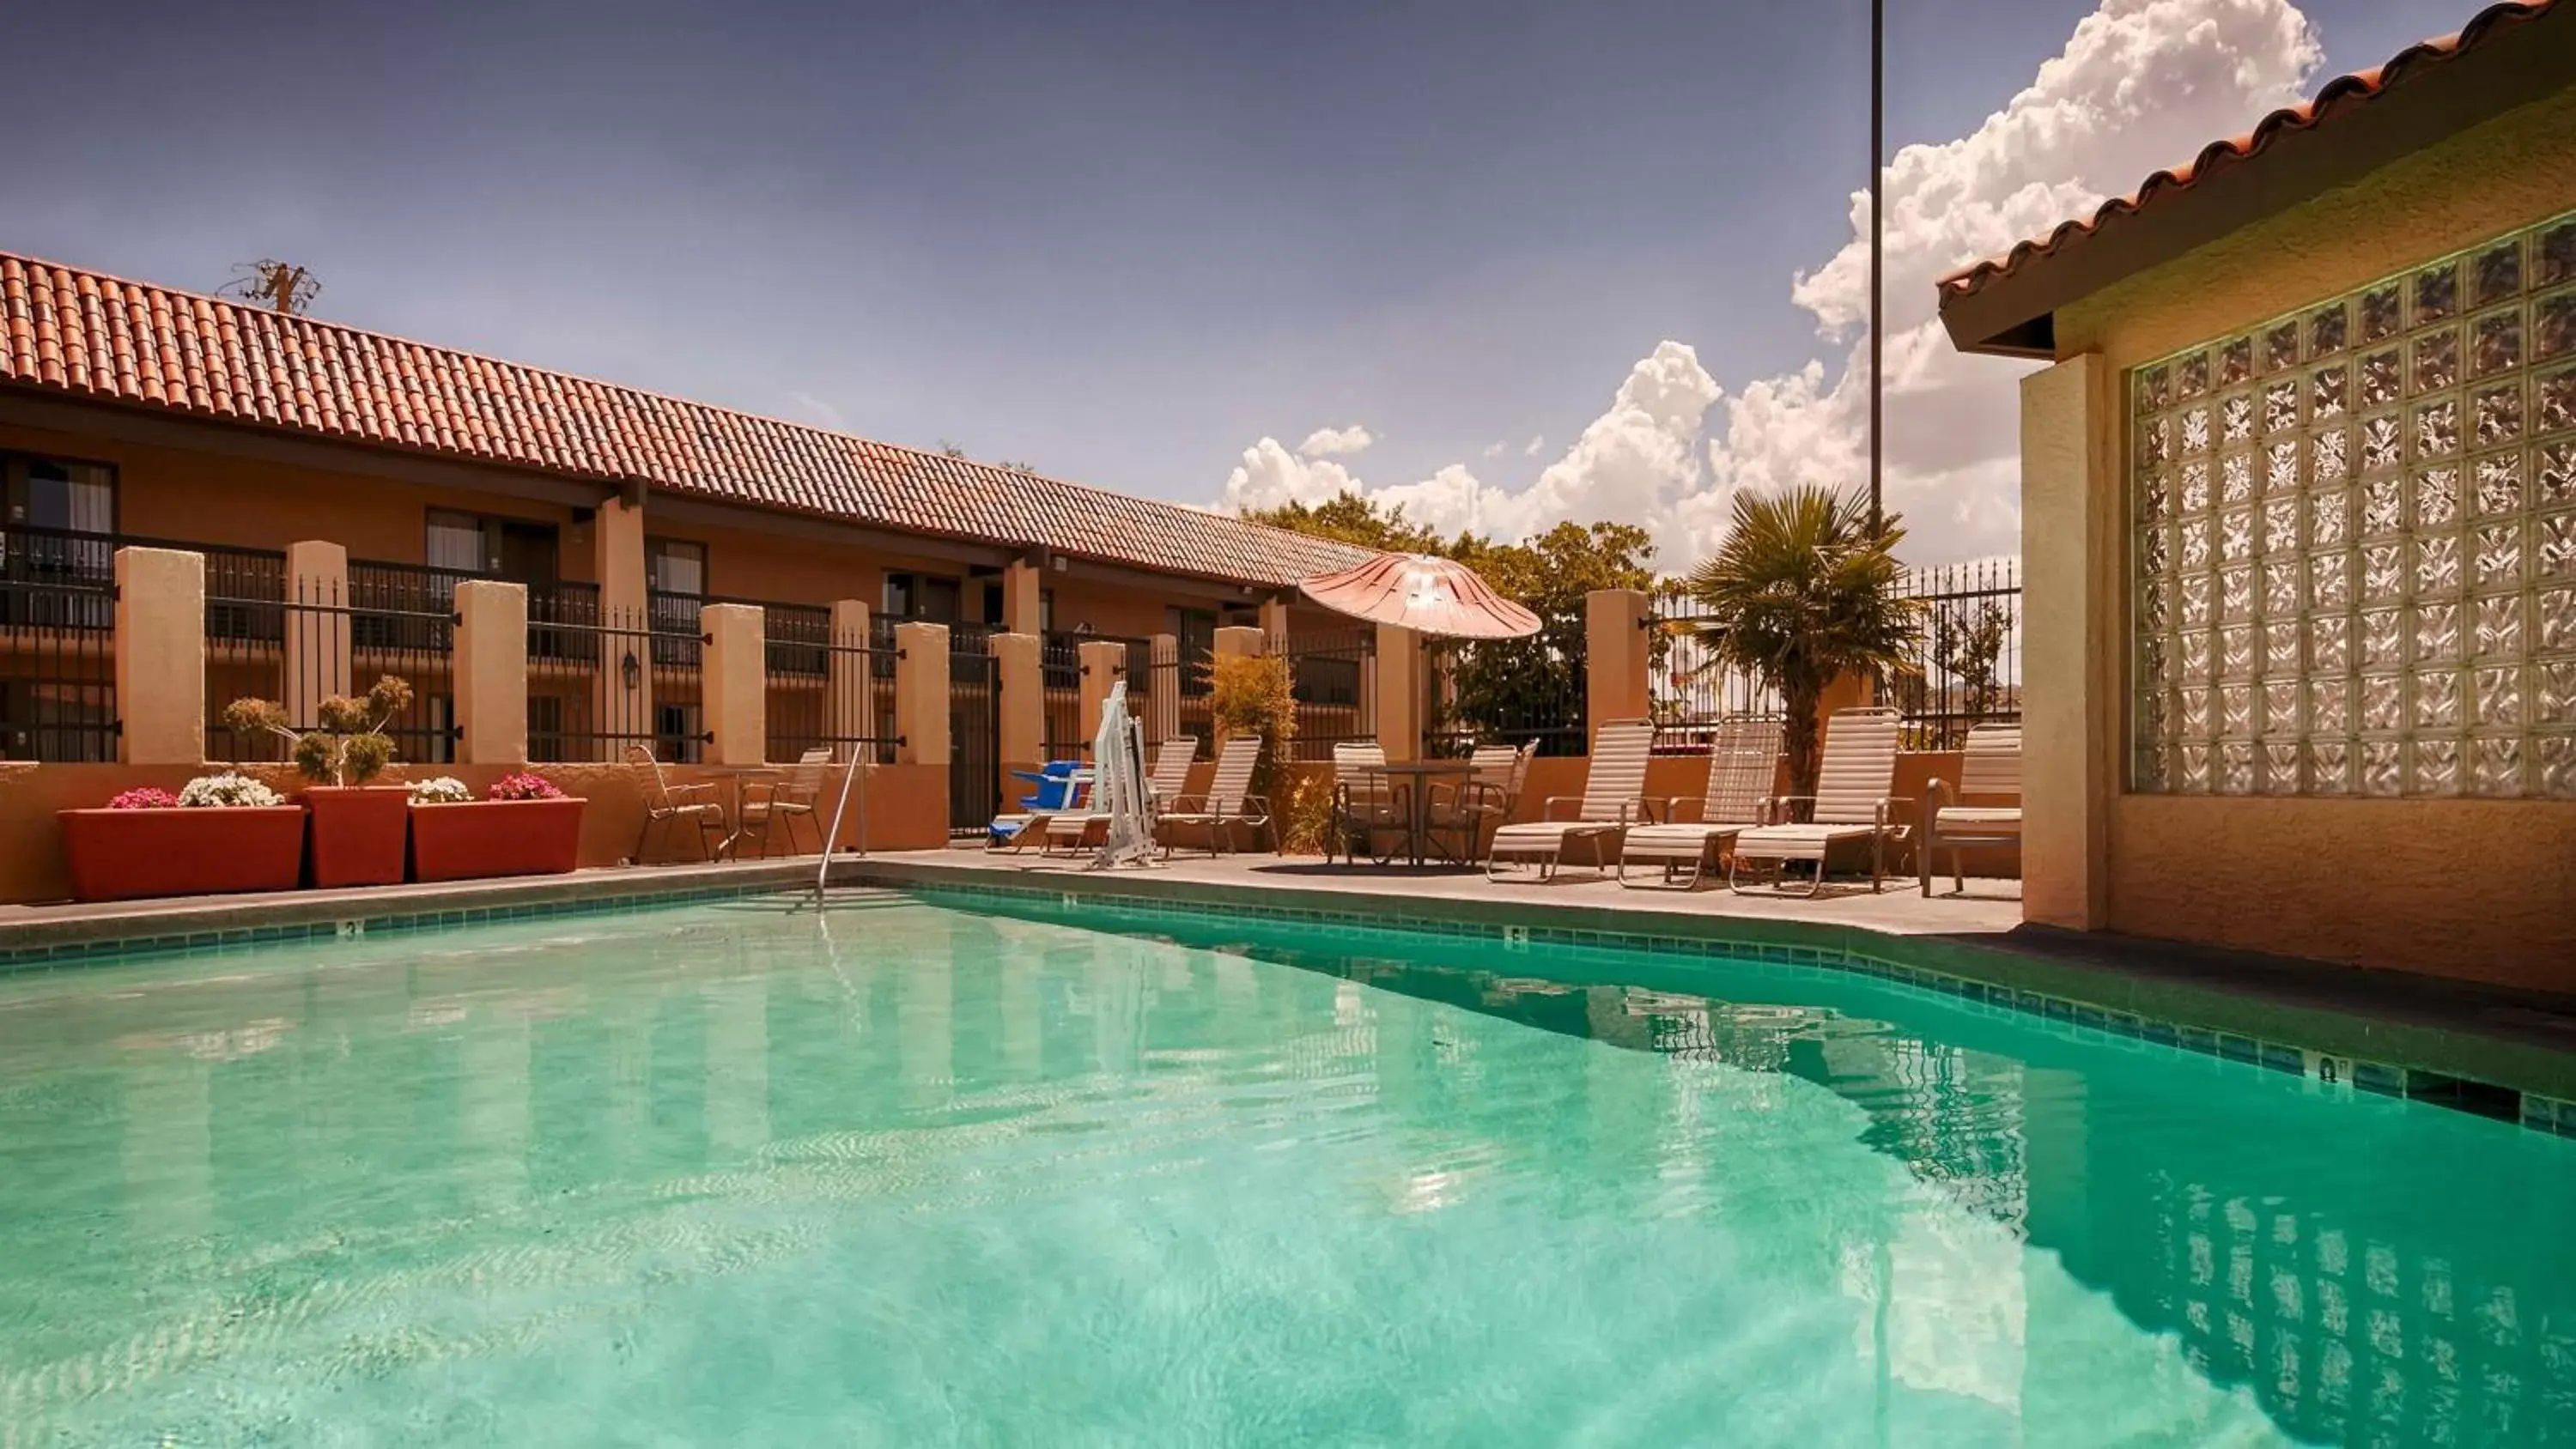 On site, Swimming Pool in Best Western Plus A Wayfarer's Inn & Suites